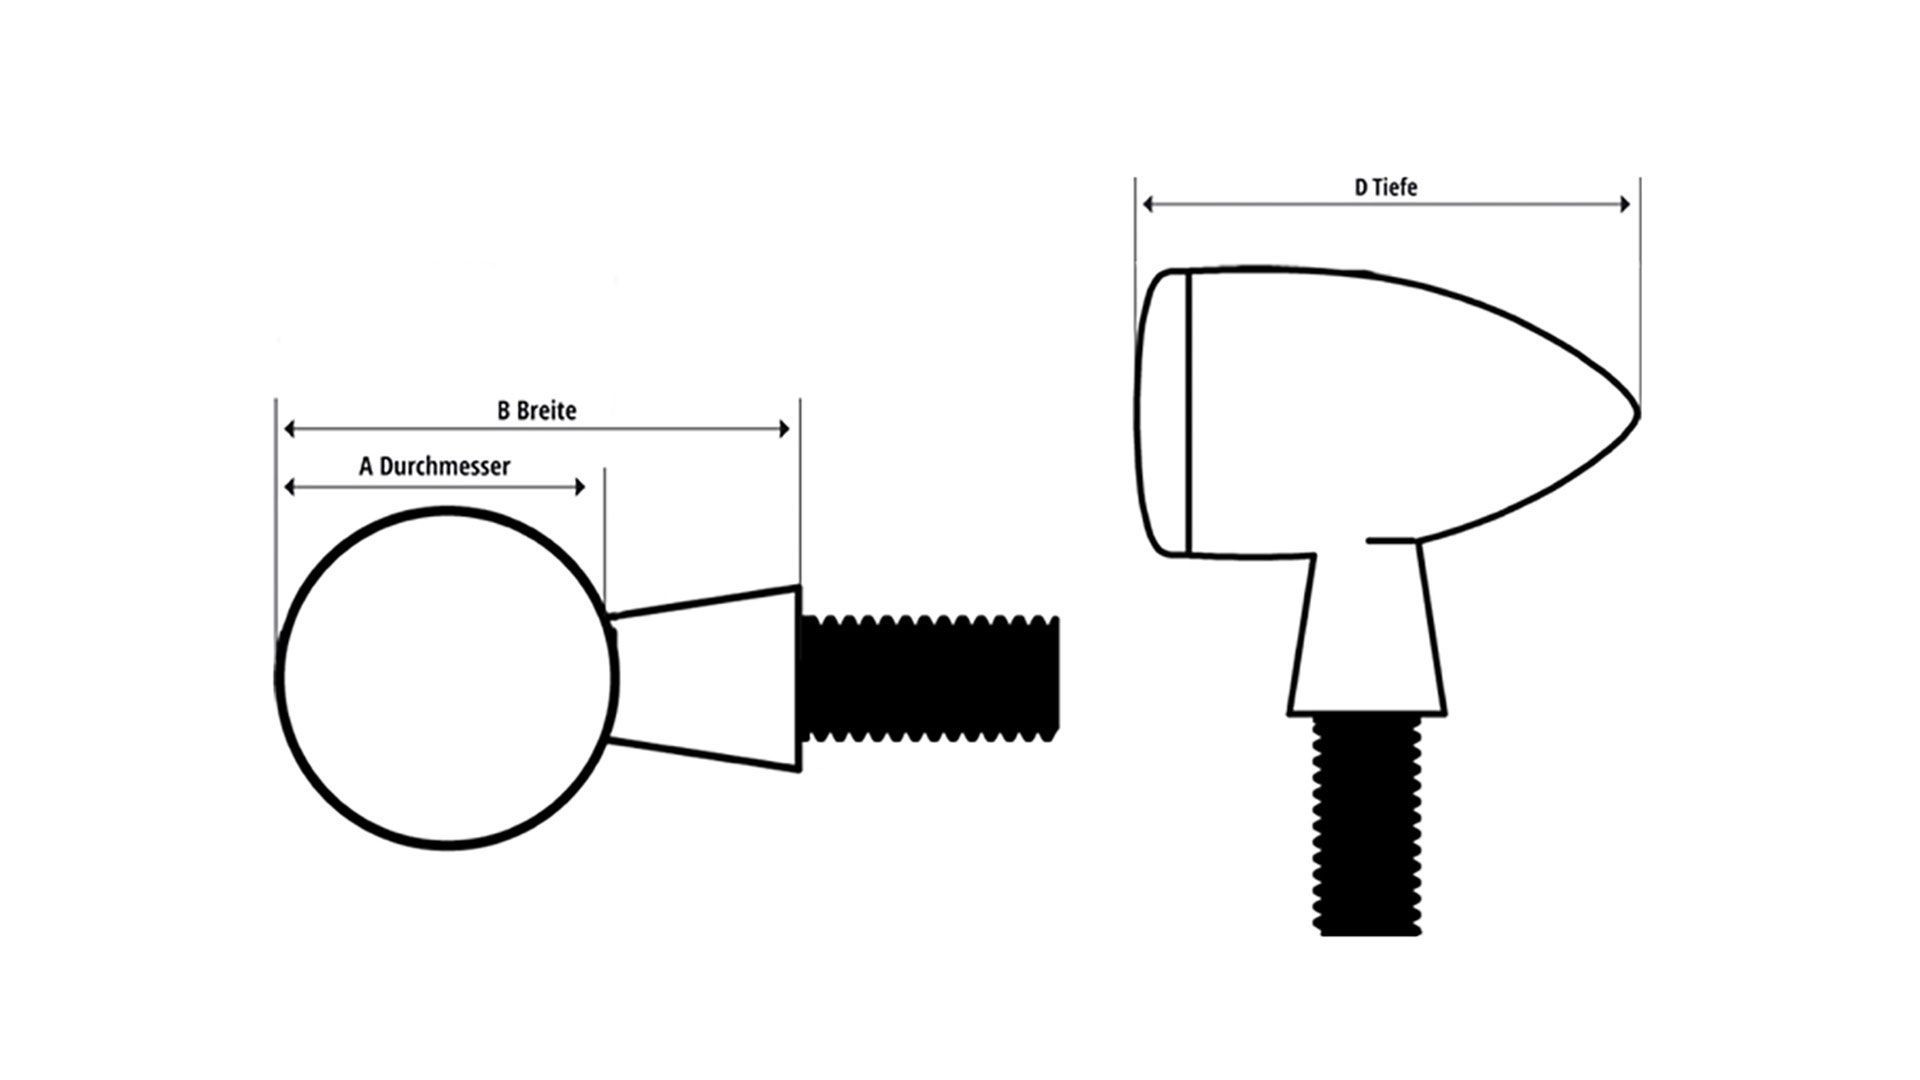 HIGHSIDER LED-Blinker/Positionsleuchte APOLLO CLASSIC, schwarz (Paar)